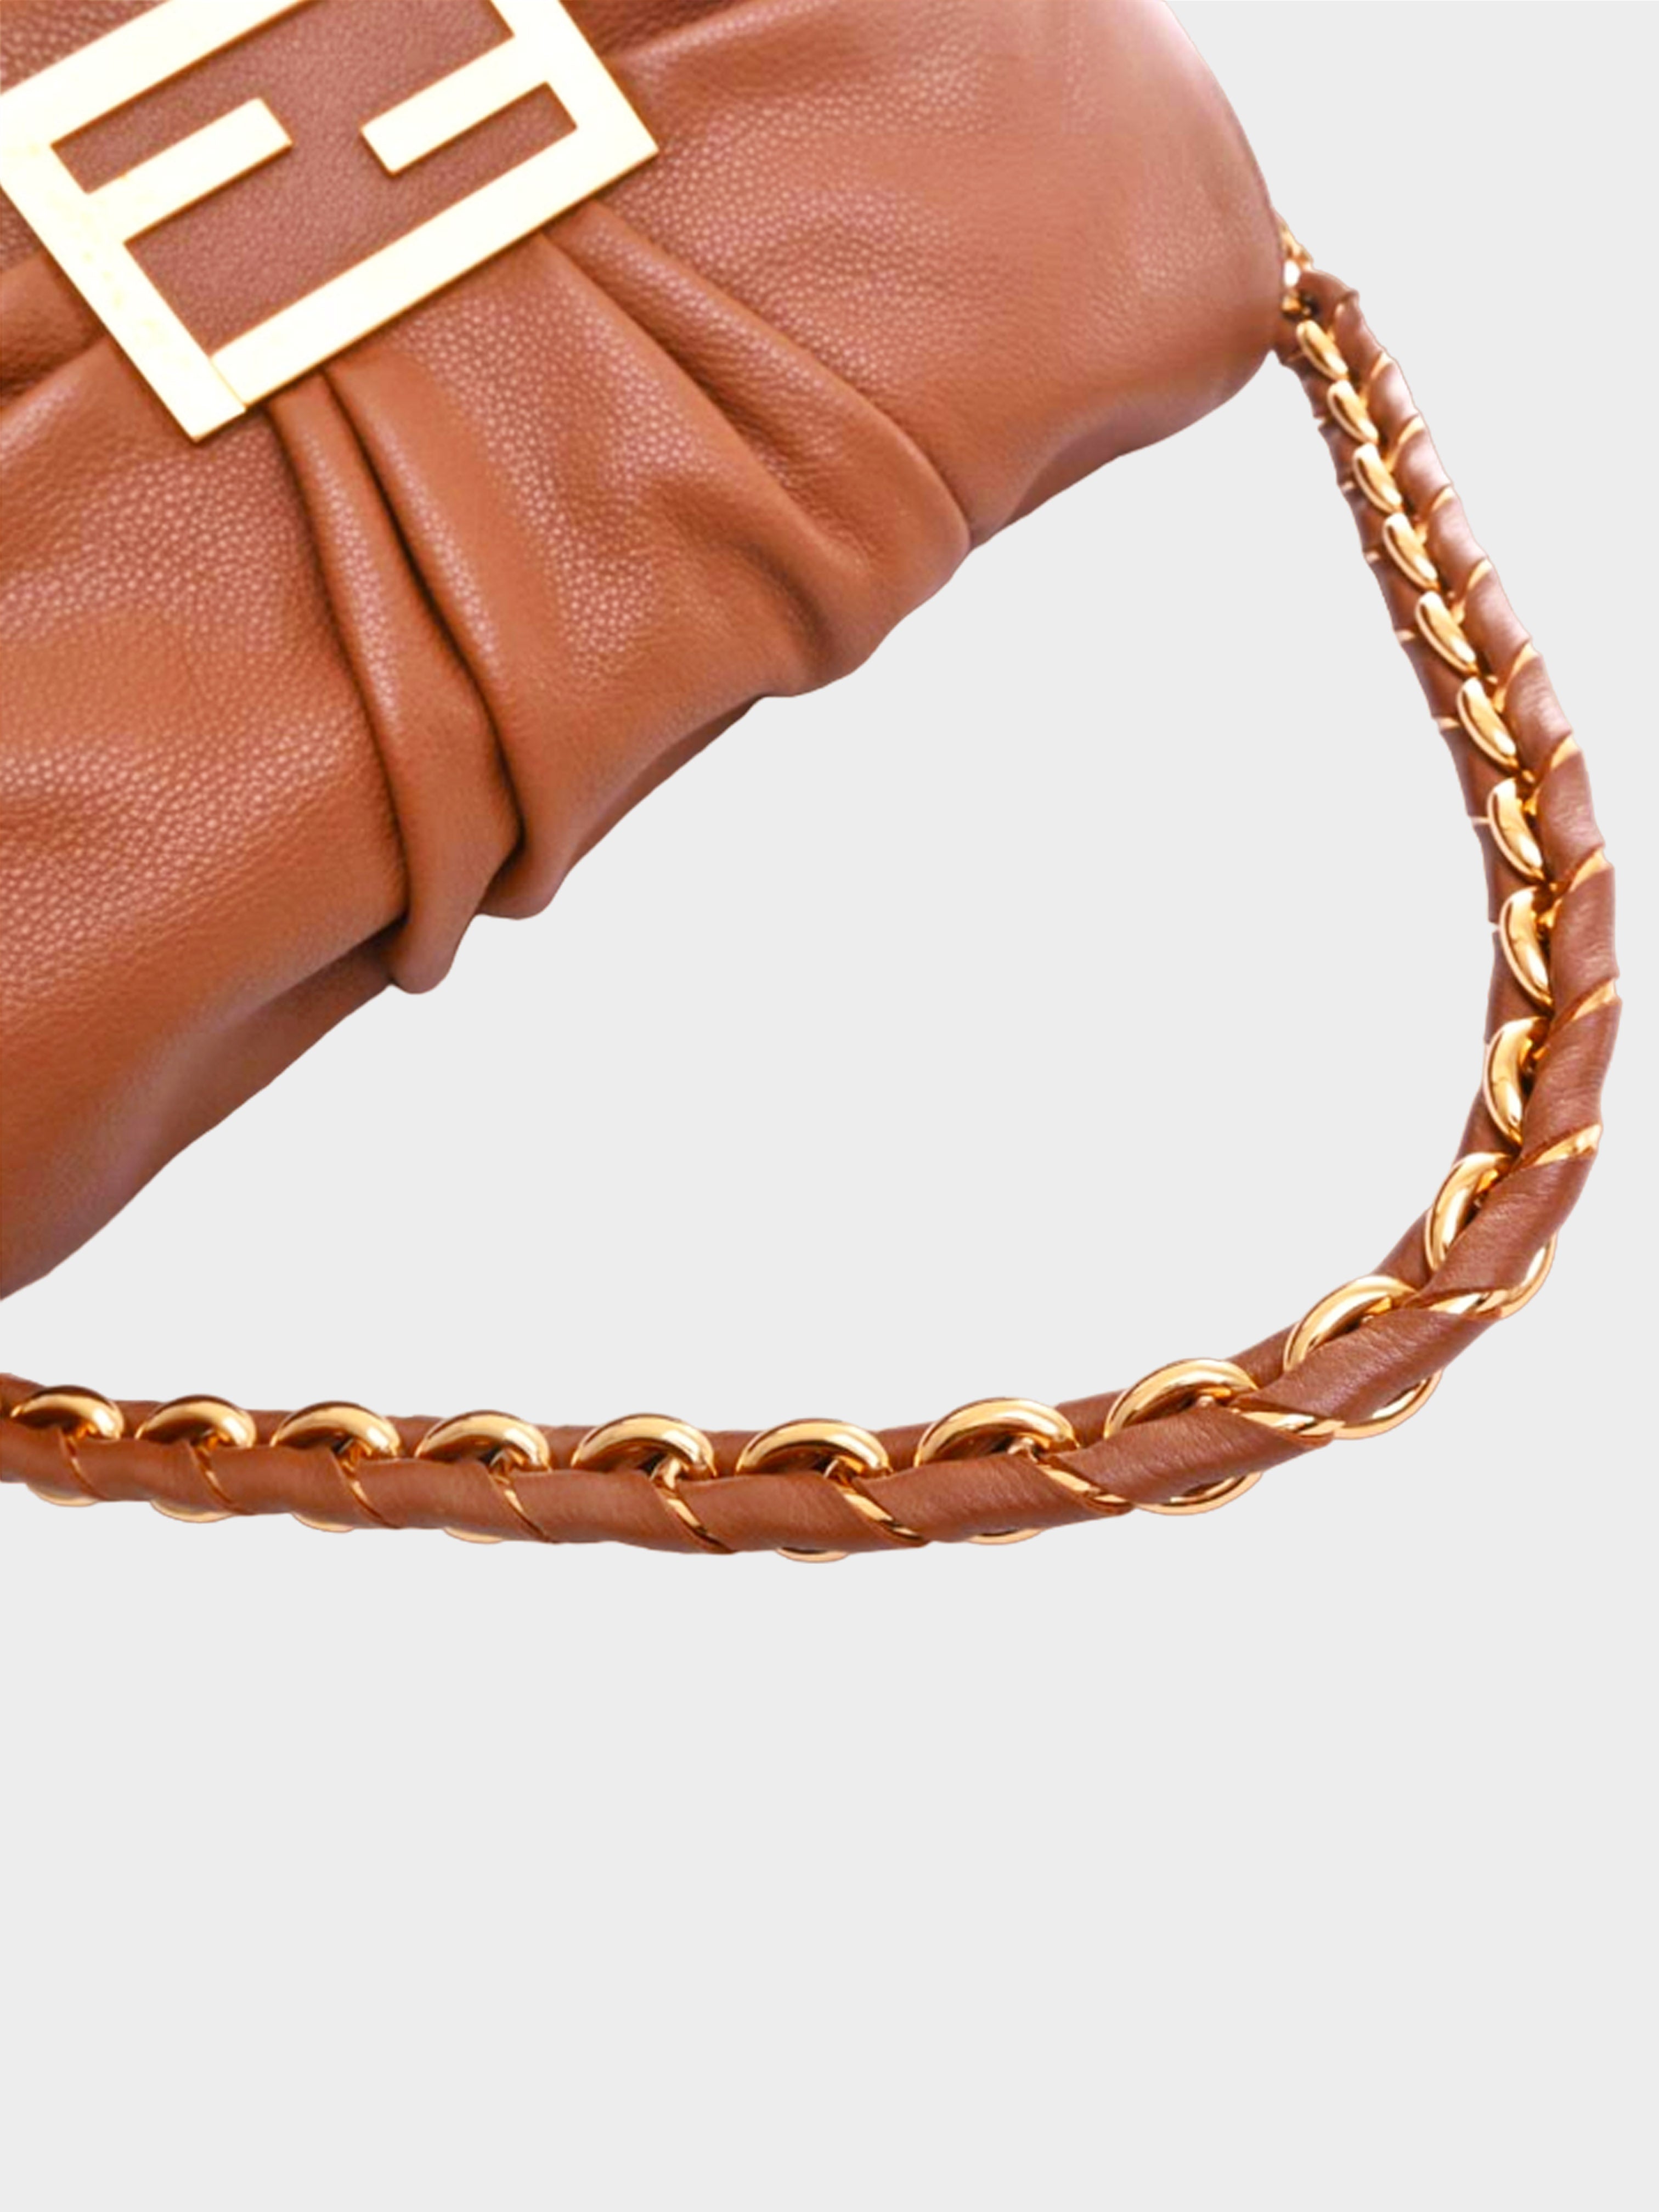 Fendi 2010s Brown Mia Chain Shoulder Bag